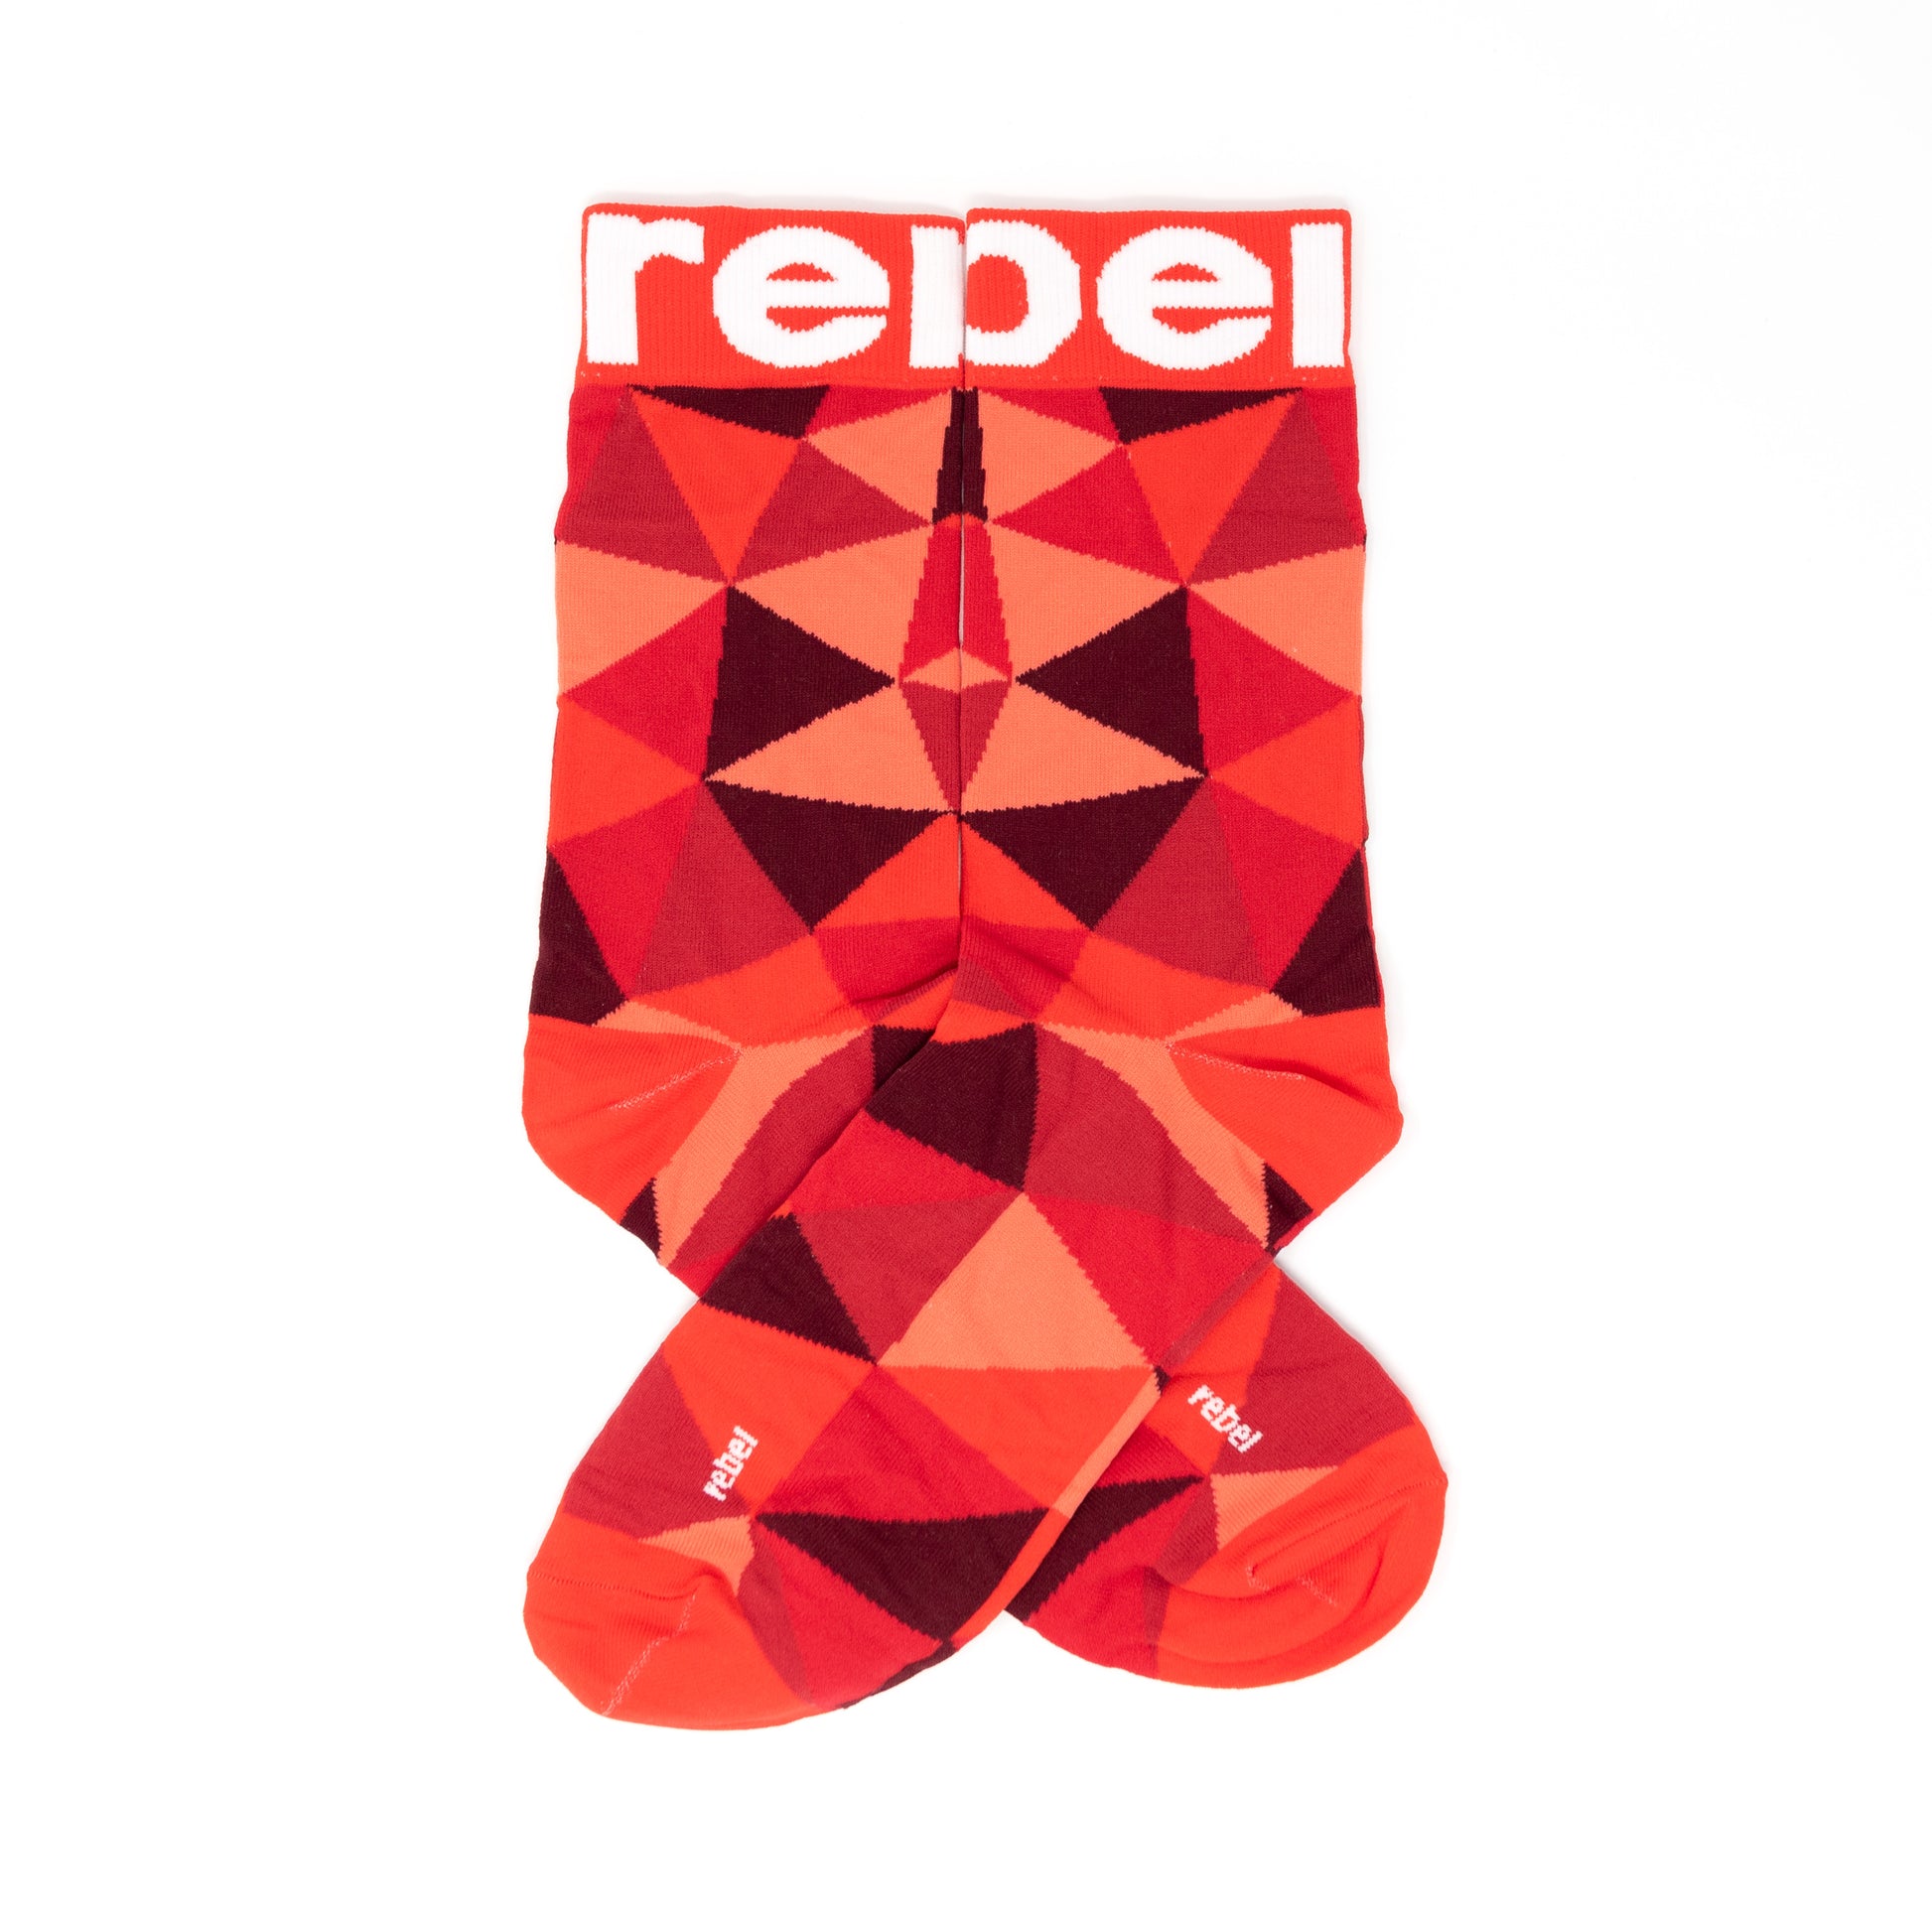 Turn heads with Rebel Fashion's Dress Red Socks!